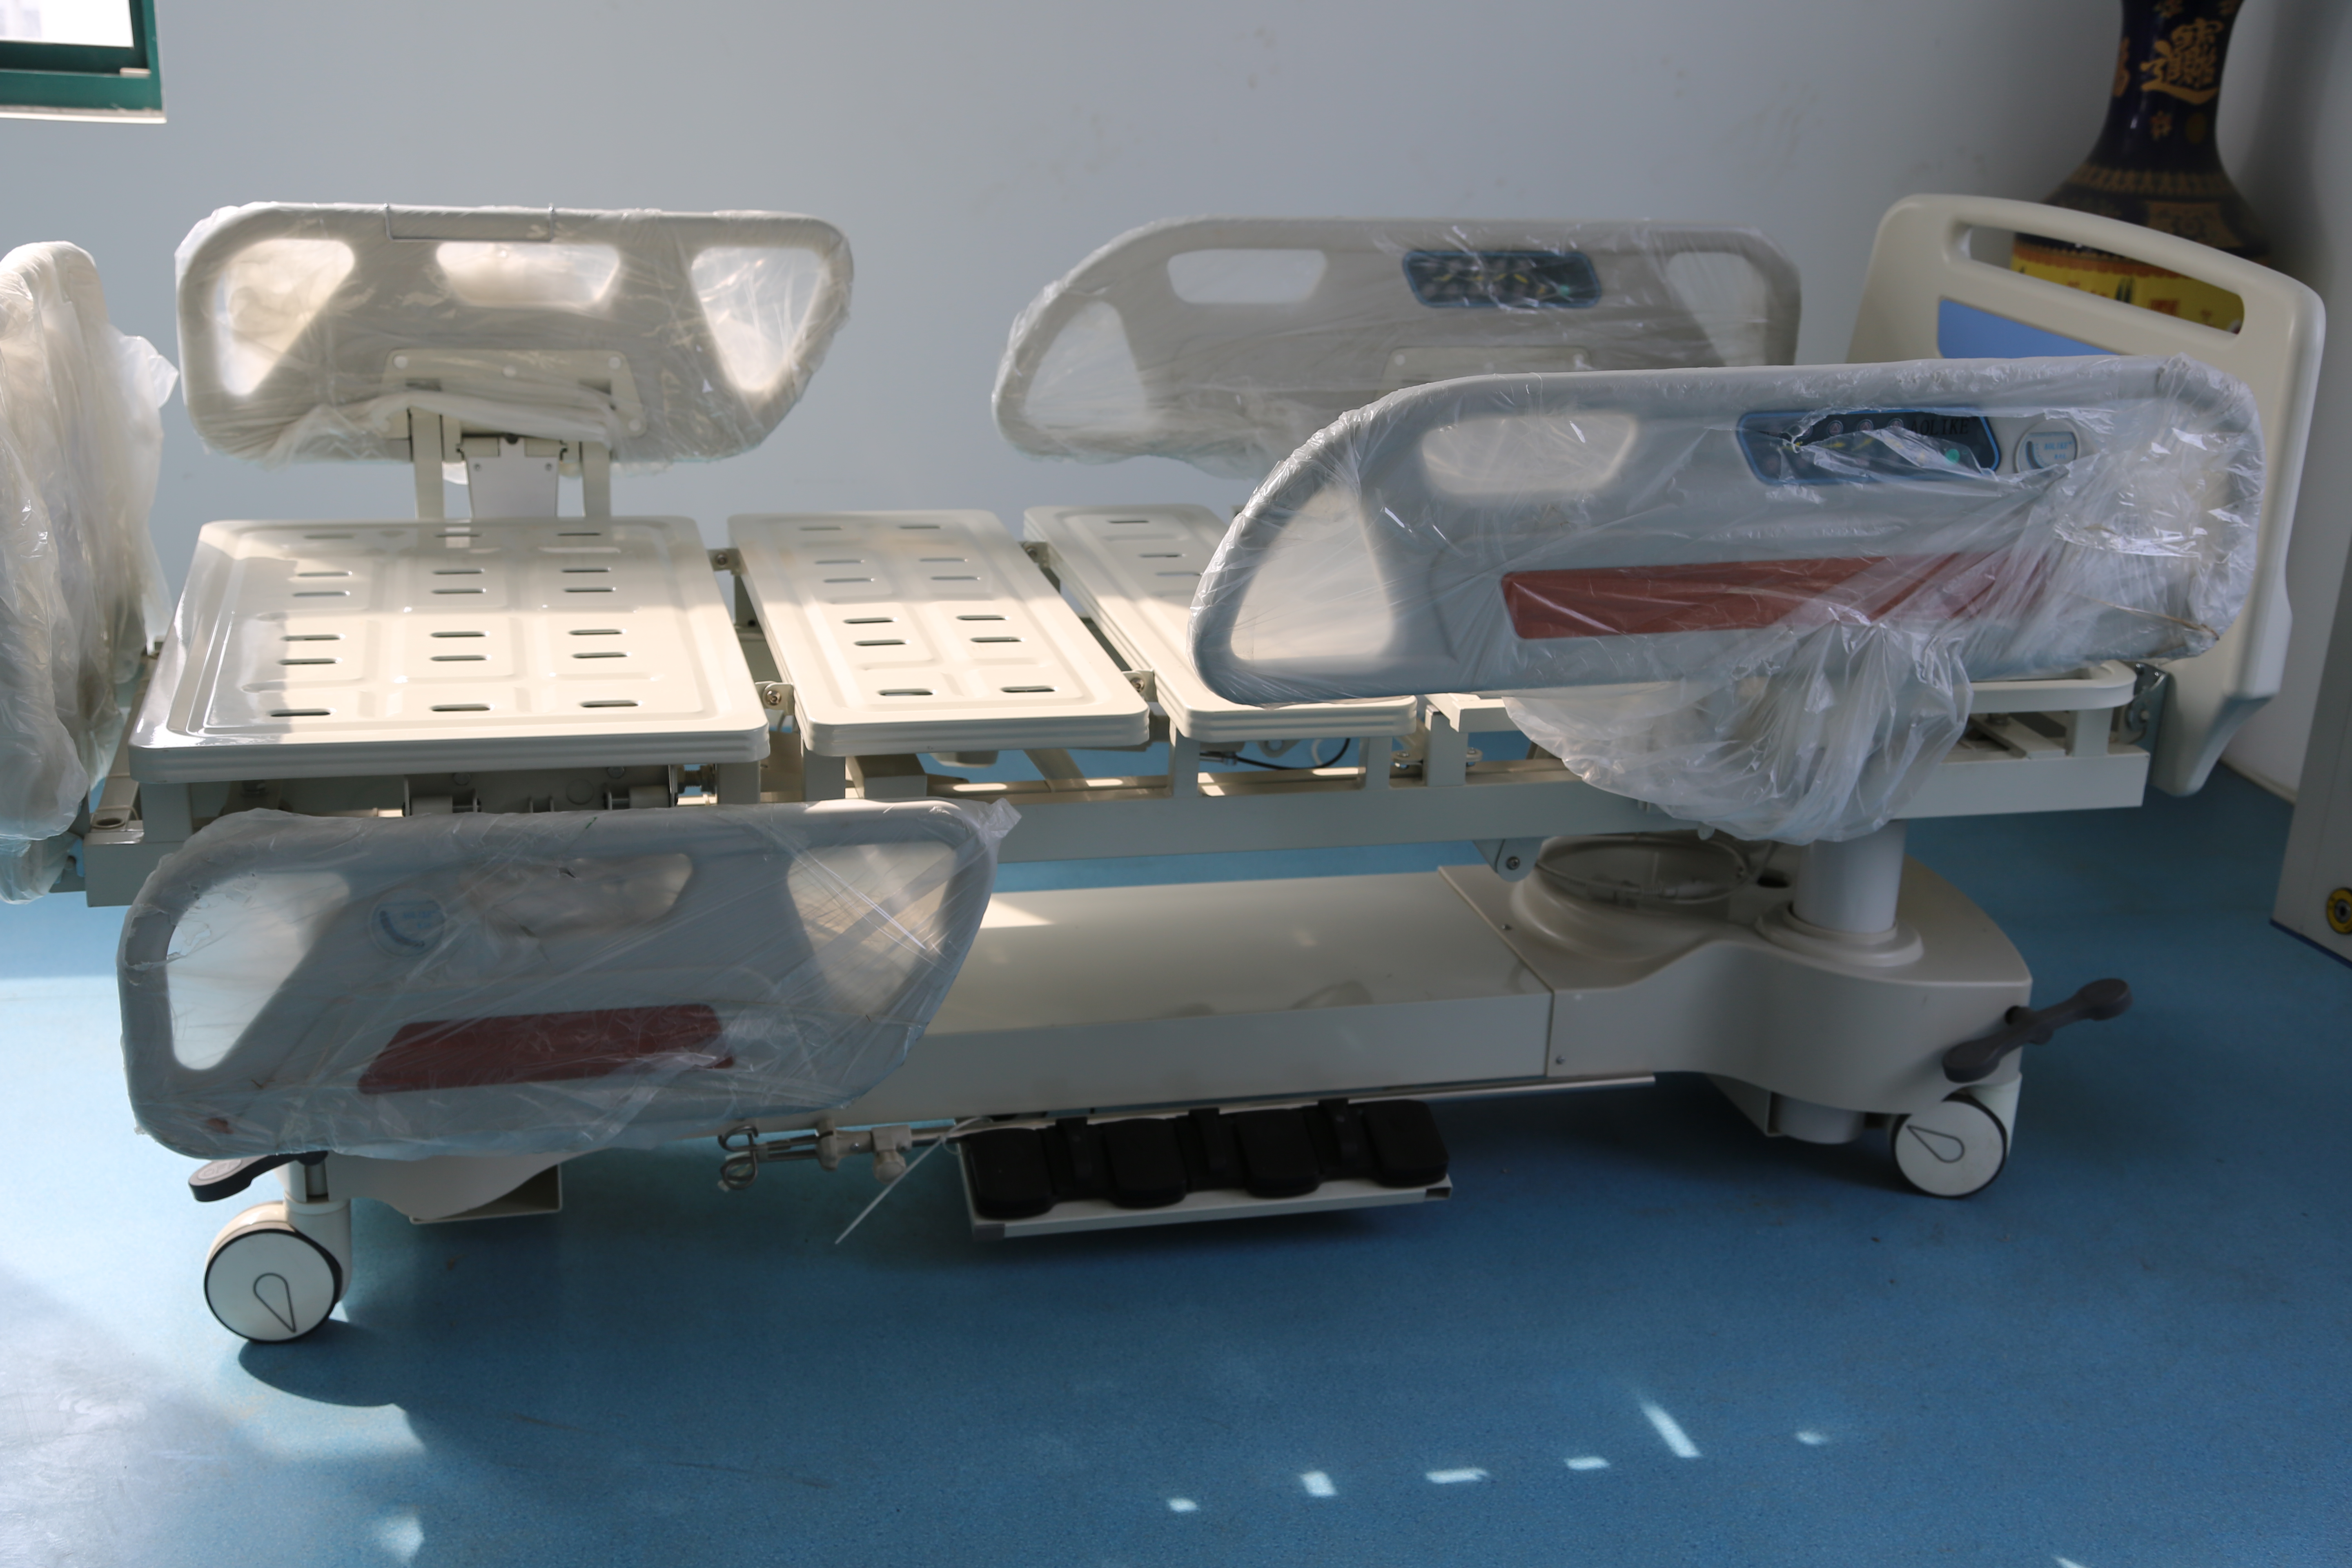 Mingtai electric hospital bed